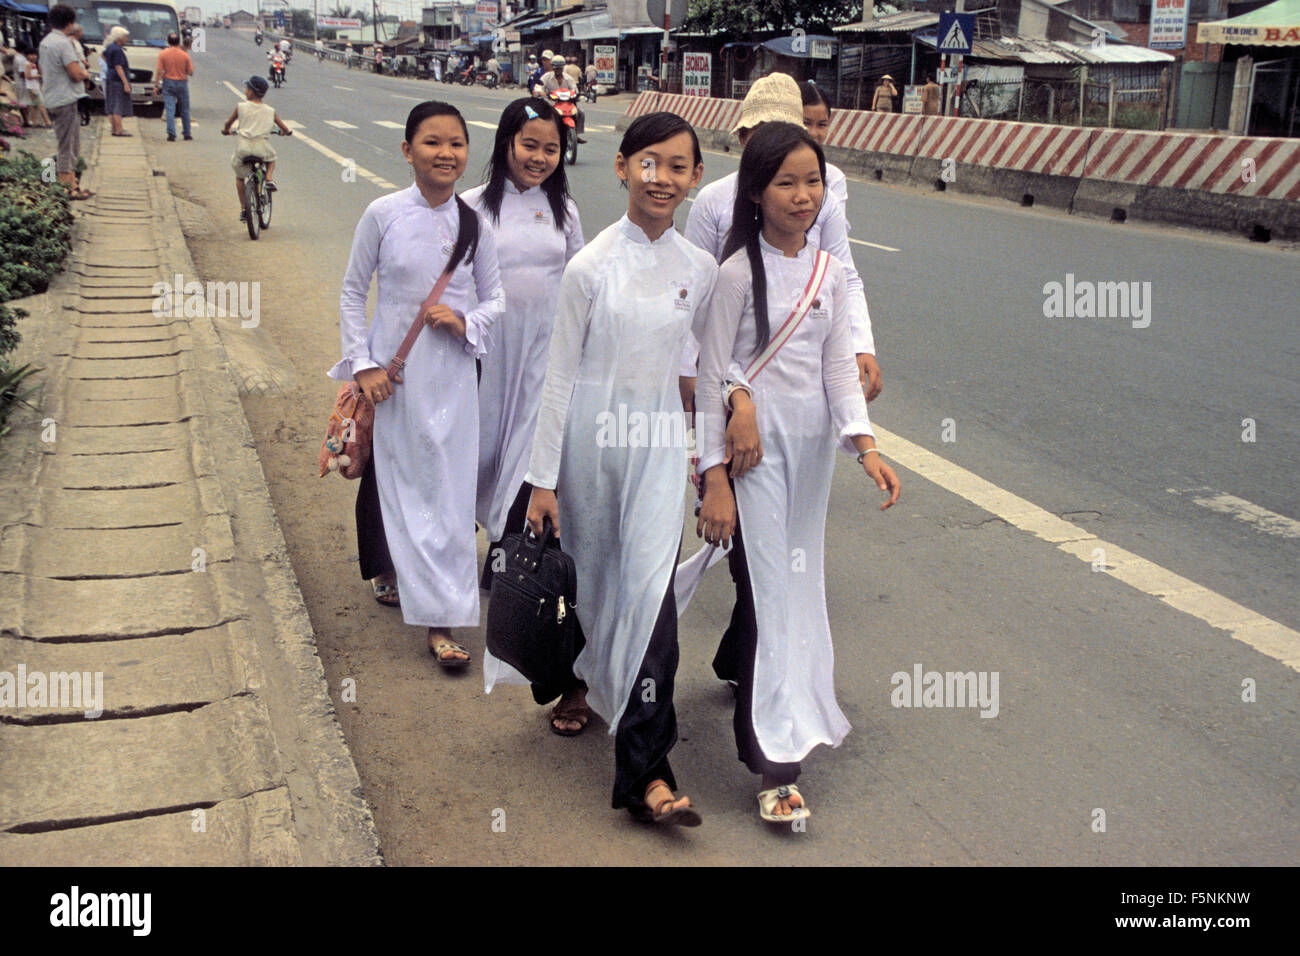 Vietnam, School Girls in Uniform, Saigon, (Ho Chi Minh Stock Photo - Alamy